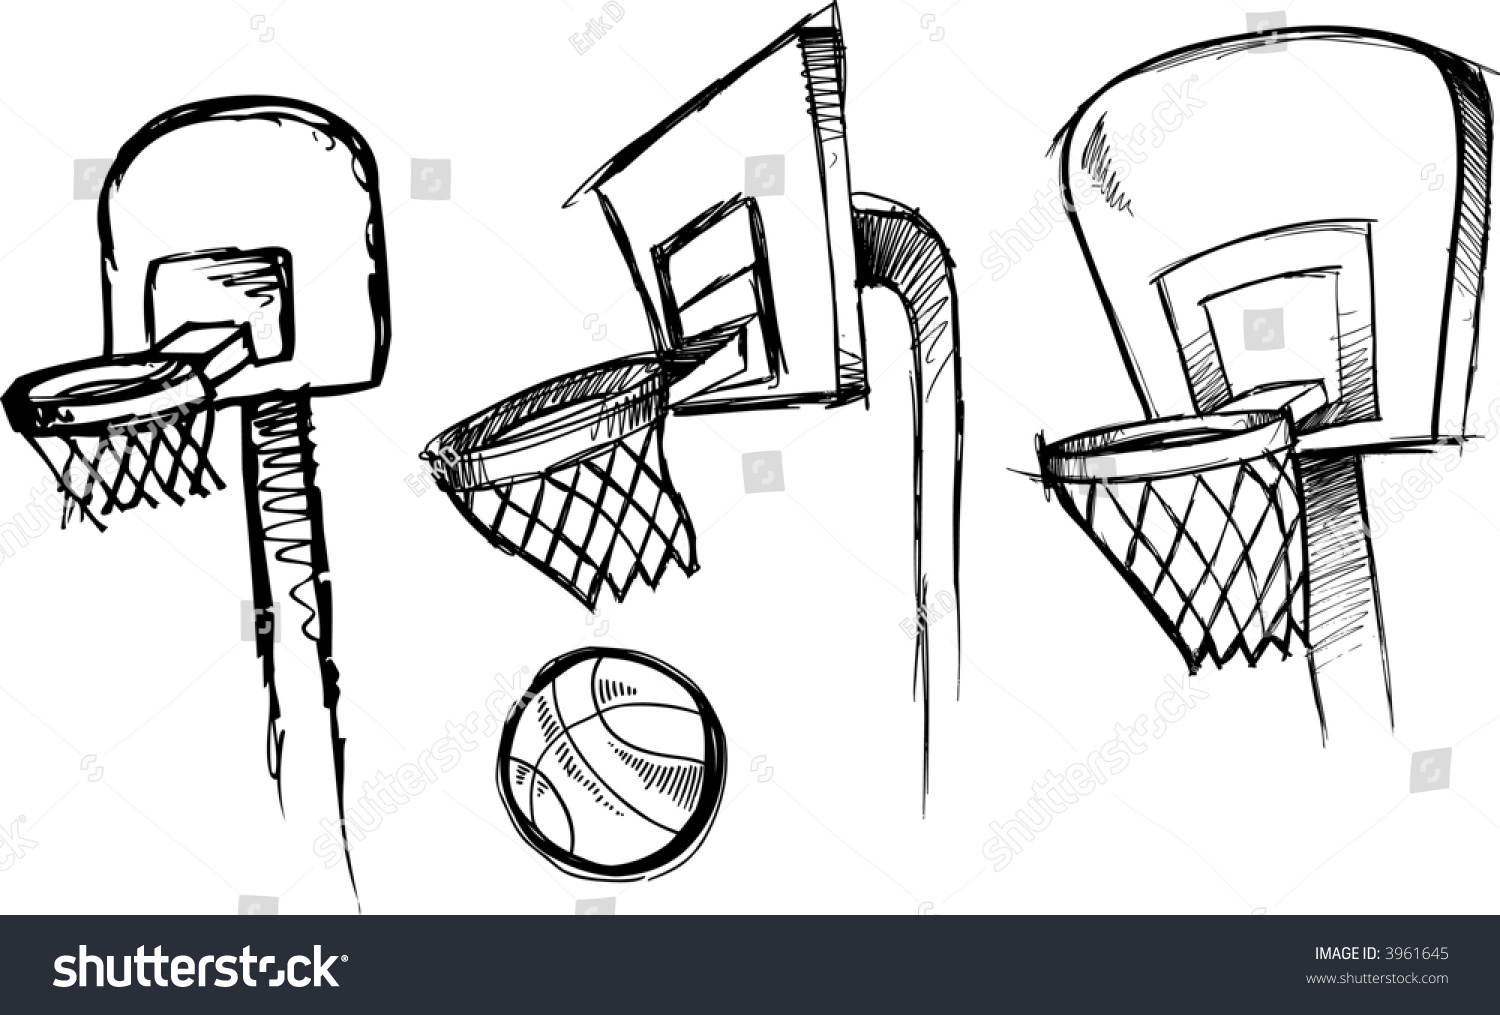 Vector Illustration Sketchy Basketball Basketball Hoop Stock Vector